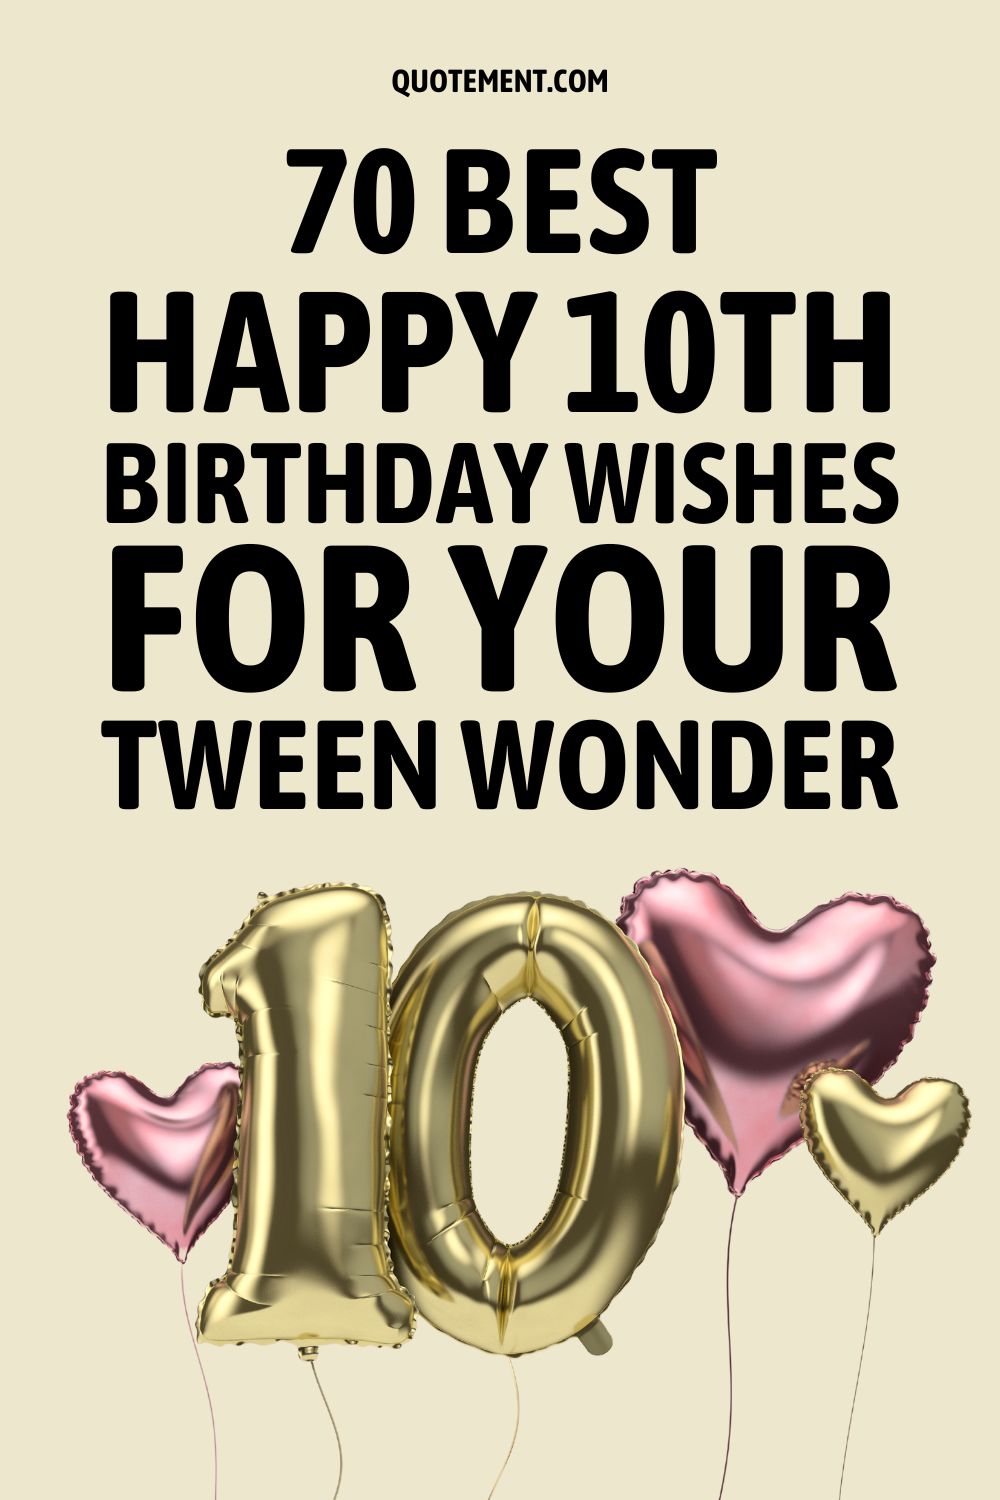 70 Best Happy 10th Birthday Wishes For Your Tween Wonder